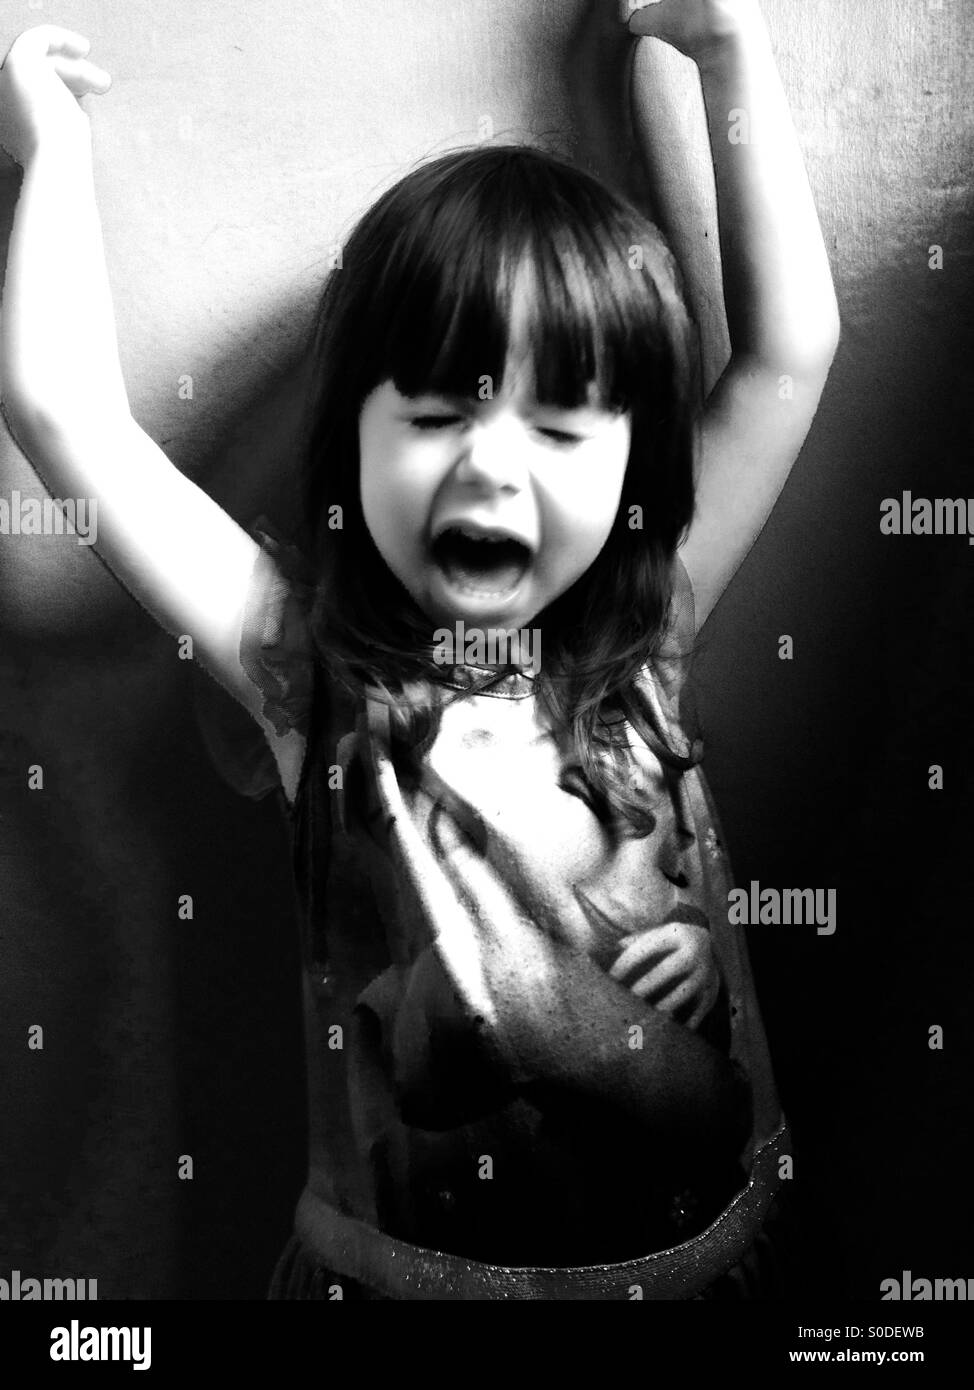 Screaming girl Stock Photo